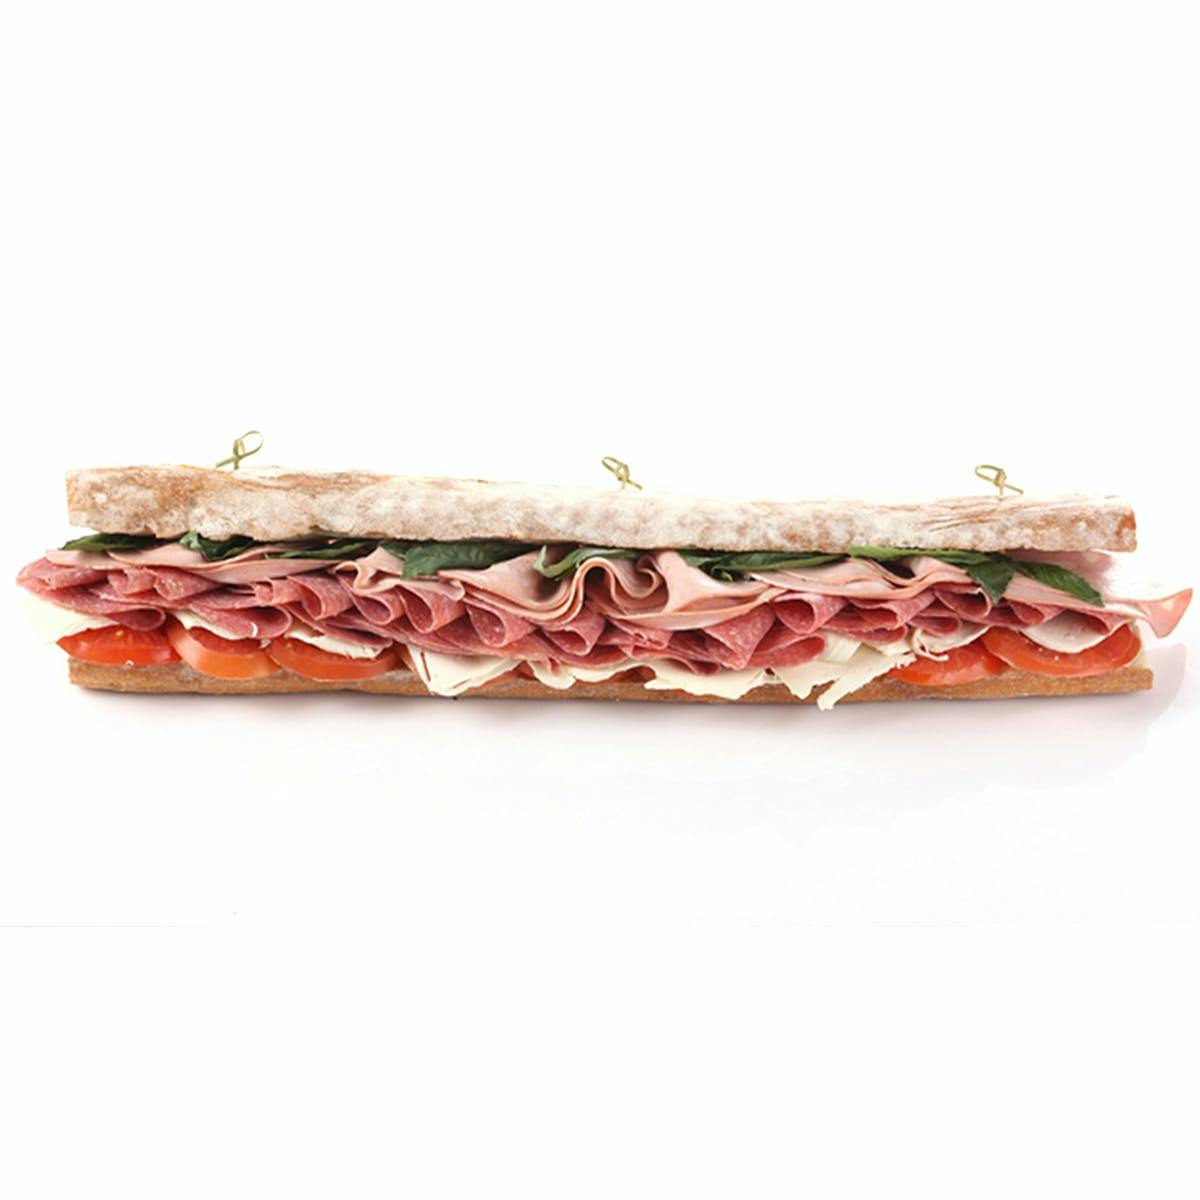 giant sub sandwich